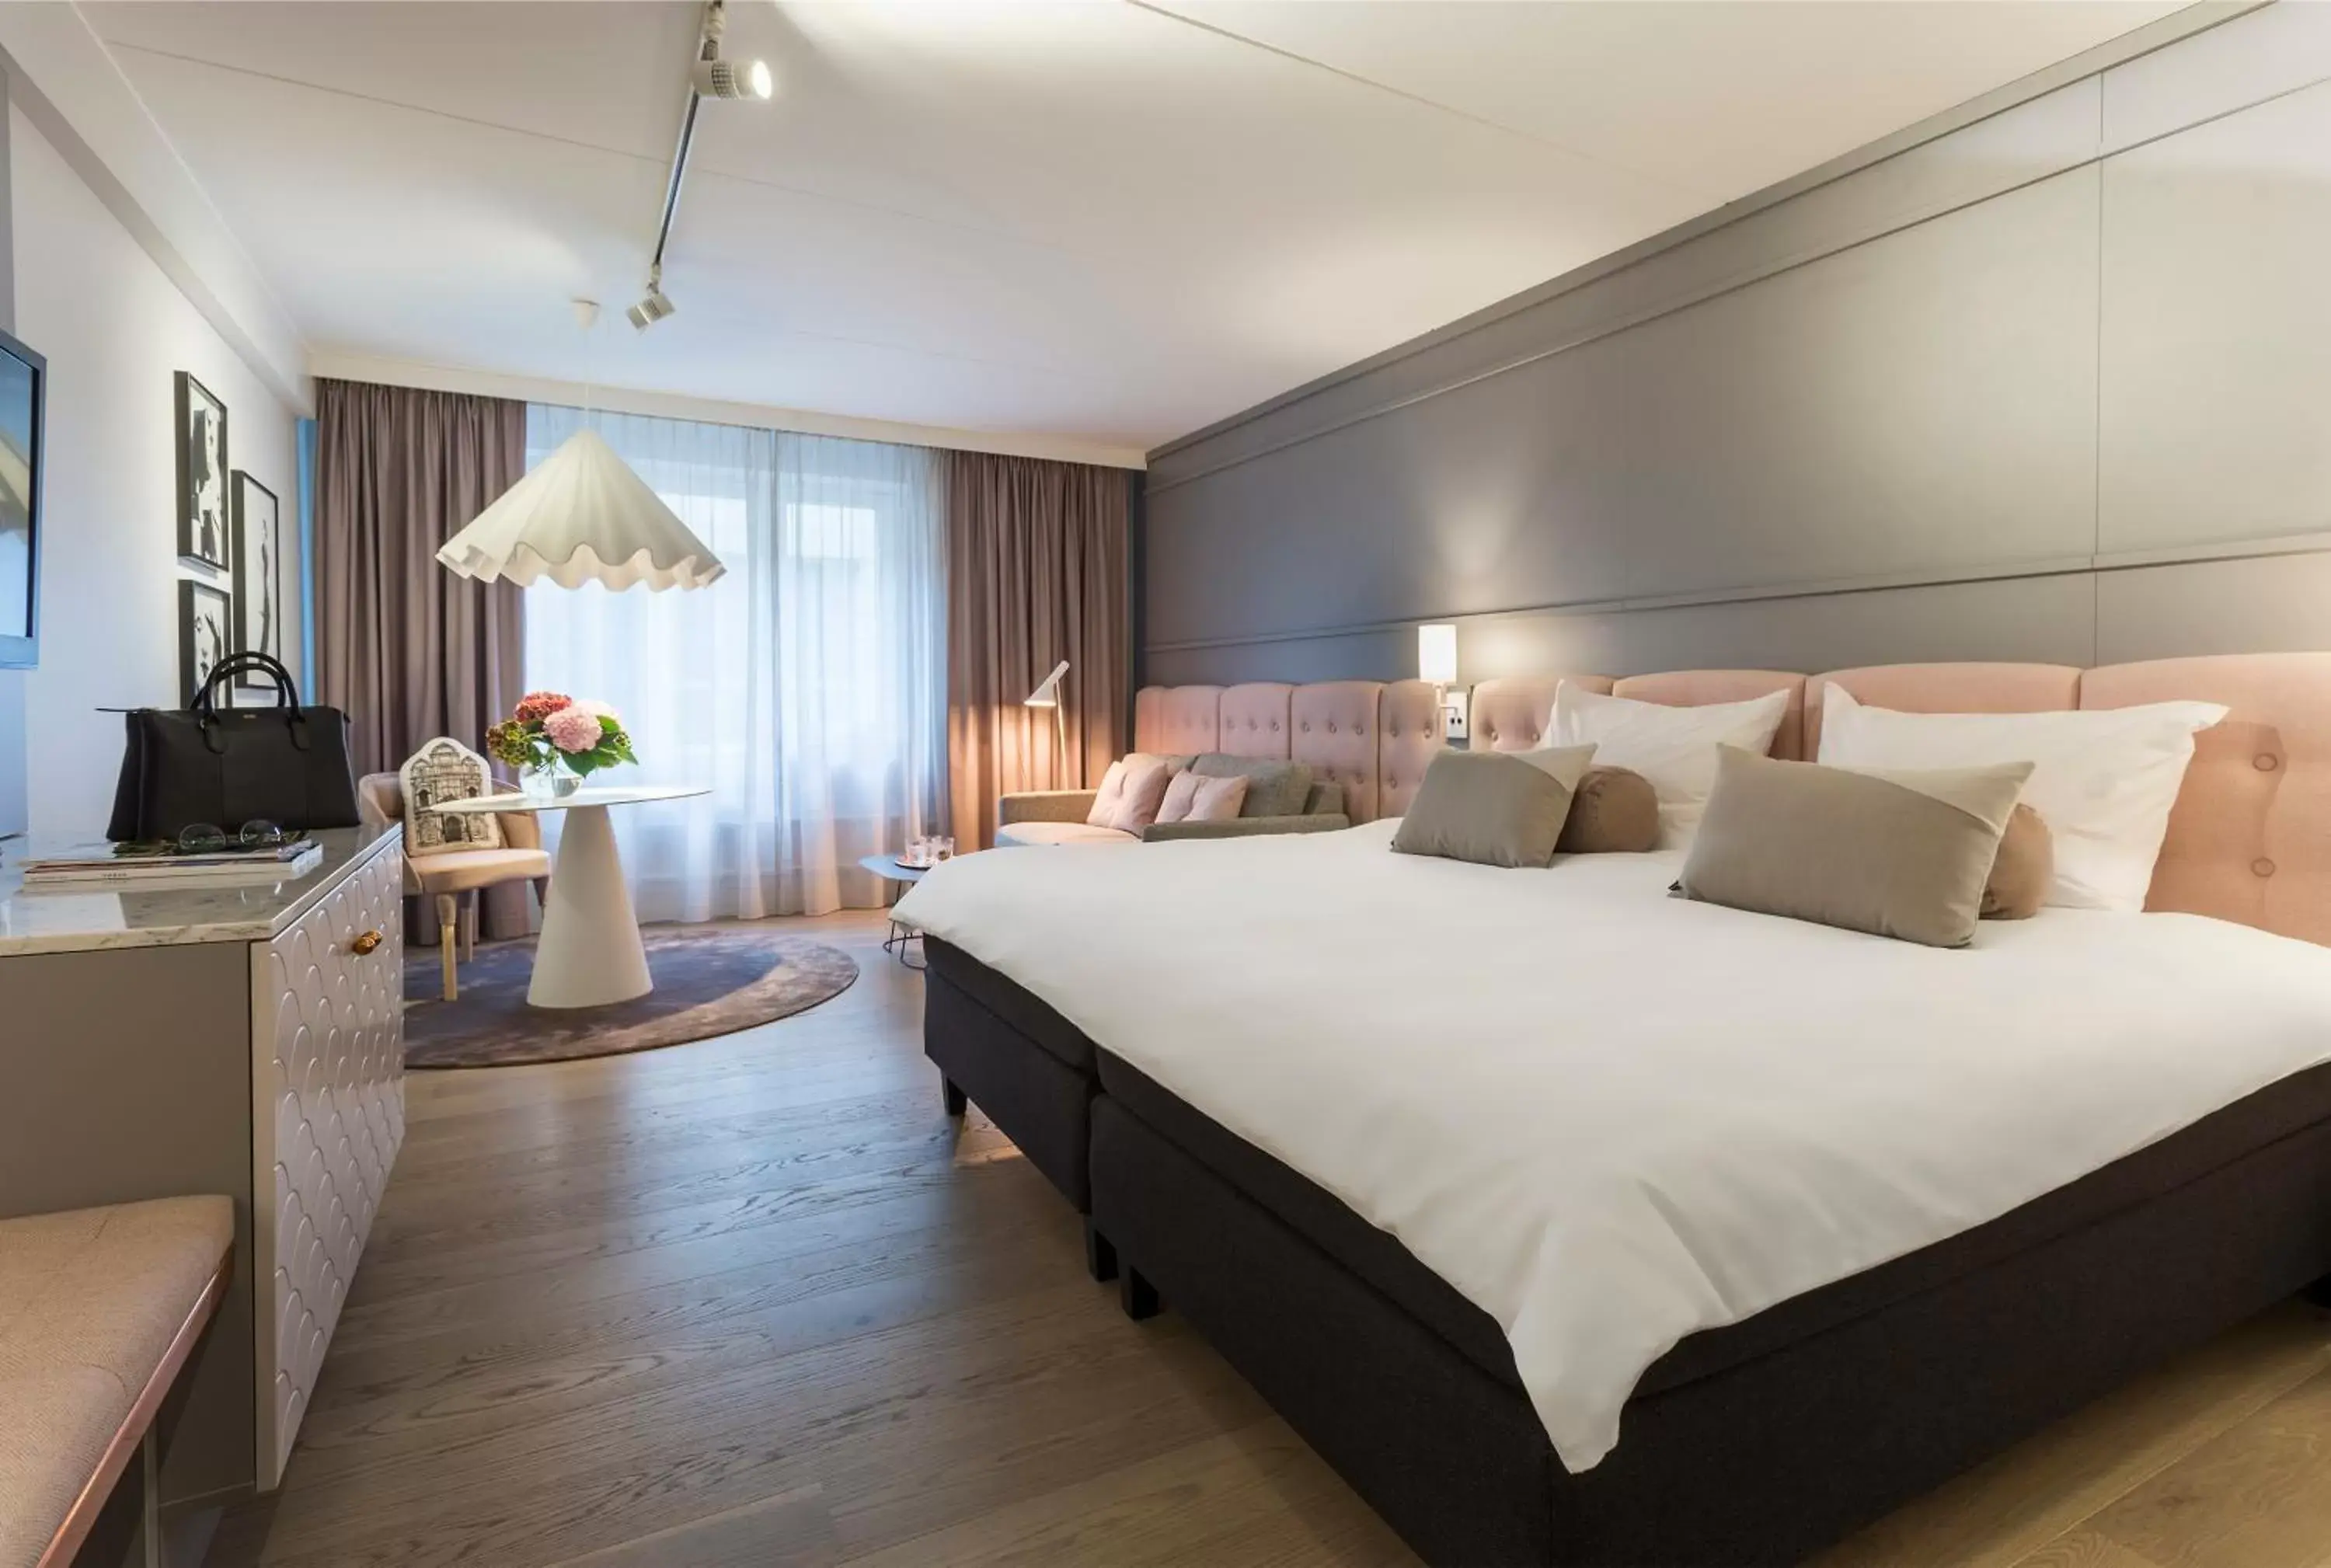 Bed, Room Photo in Radisson Blu Scandinavia Hotel, Göteborg